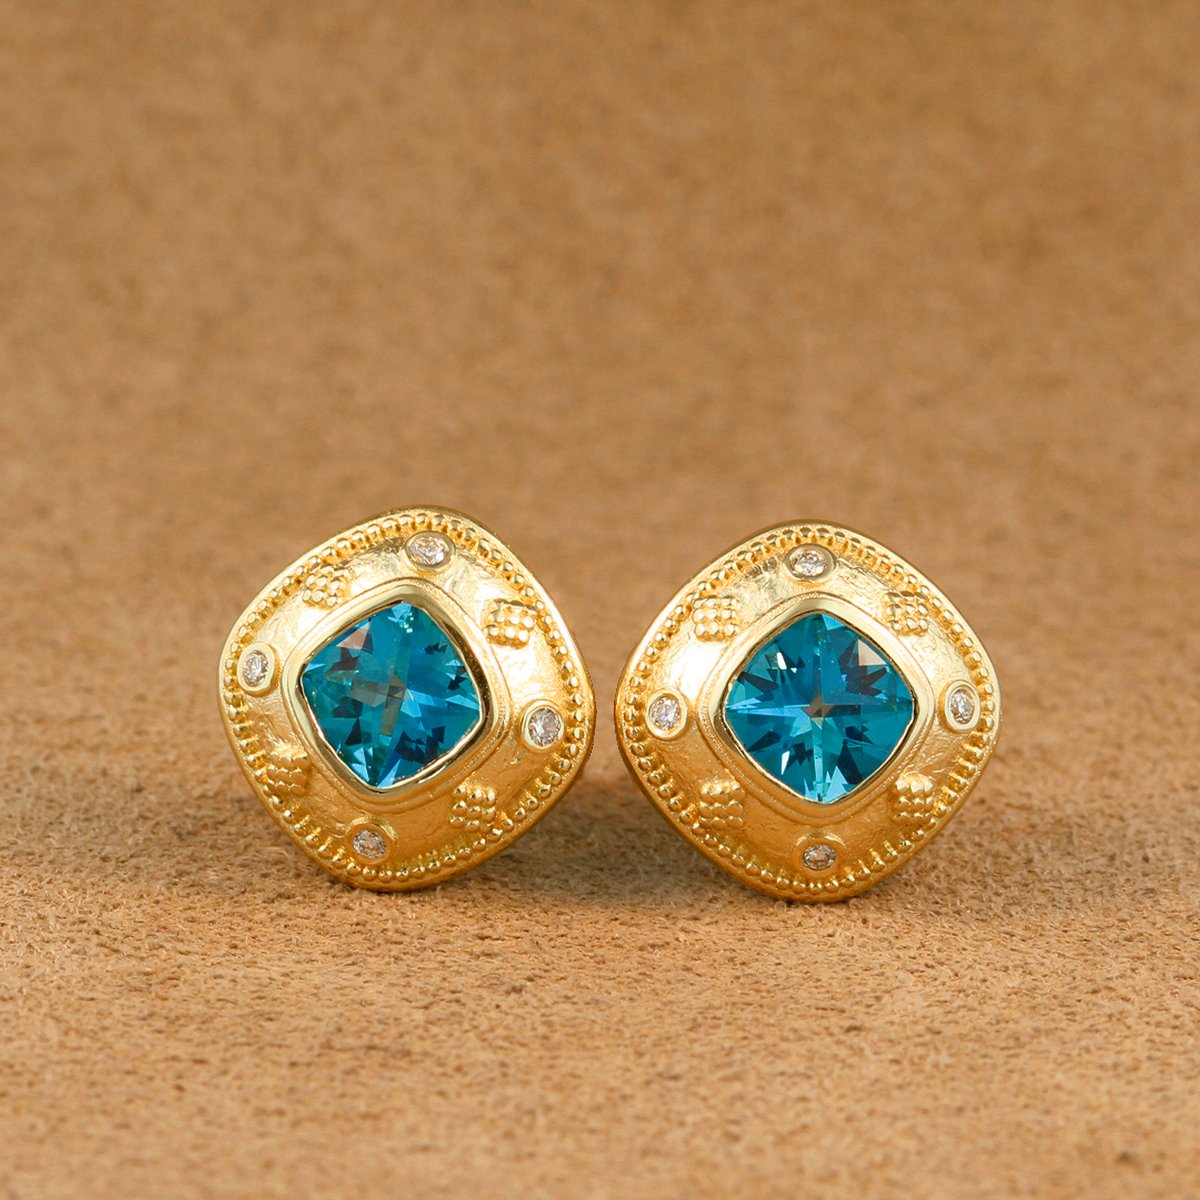 Venice Earrings with 14K Gold 6mm Paraiba Blue Topaz and Diamond